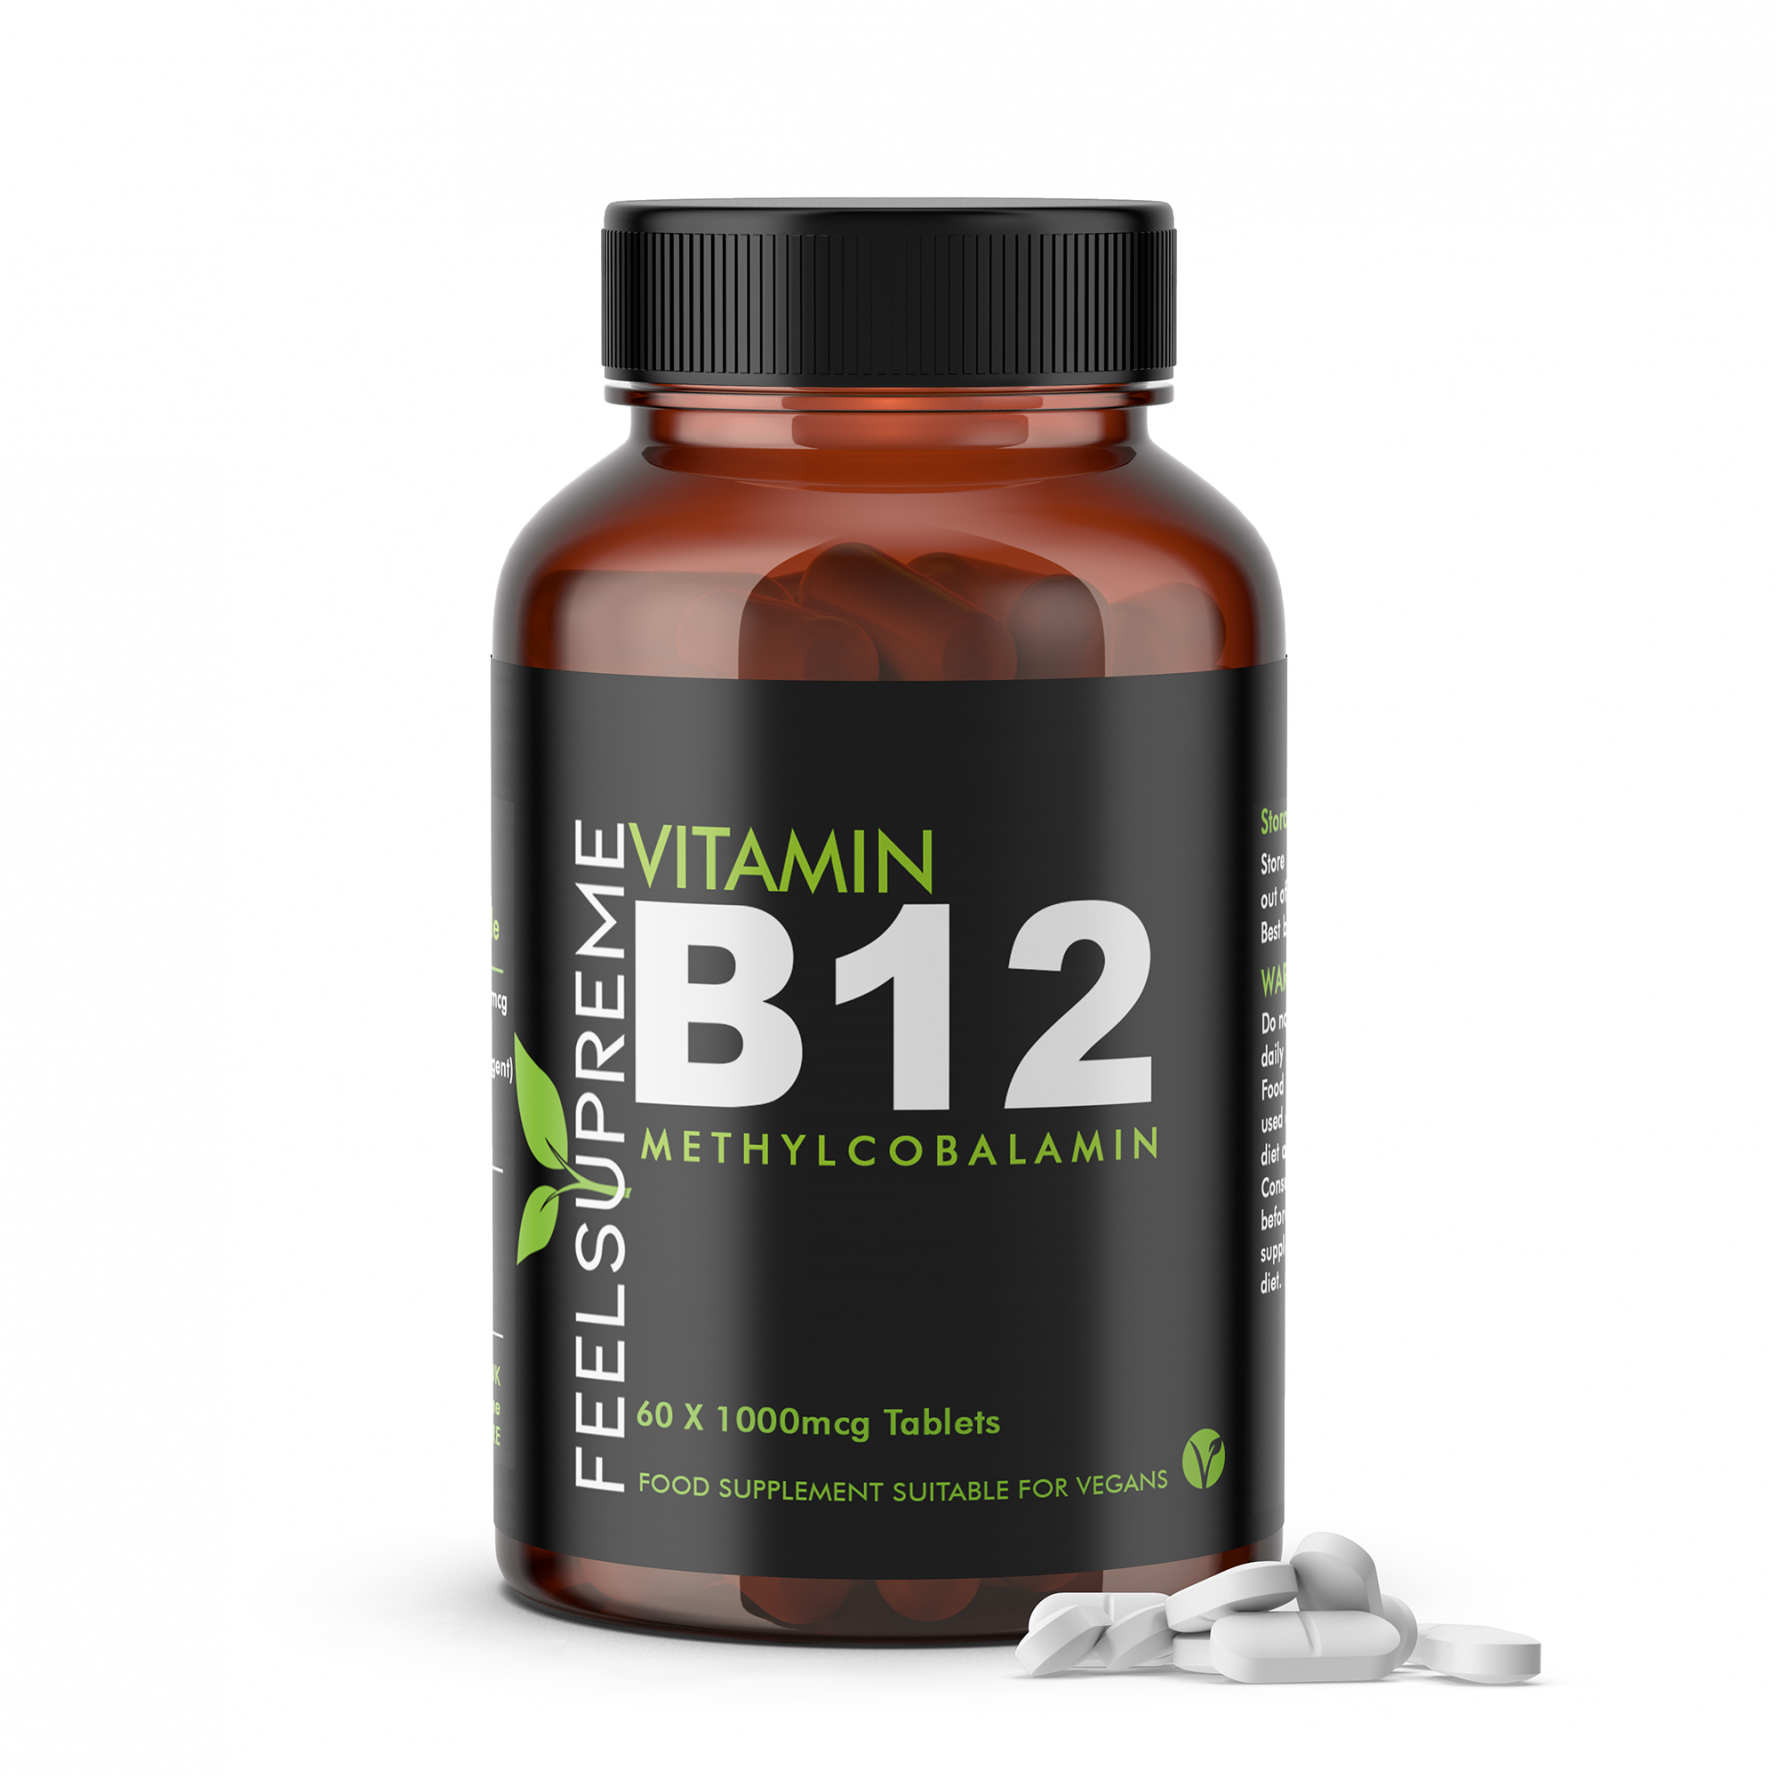 Feel Supreme Vitamin B12 60's